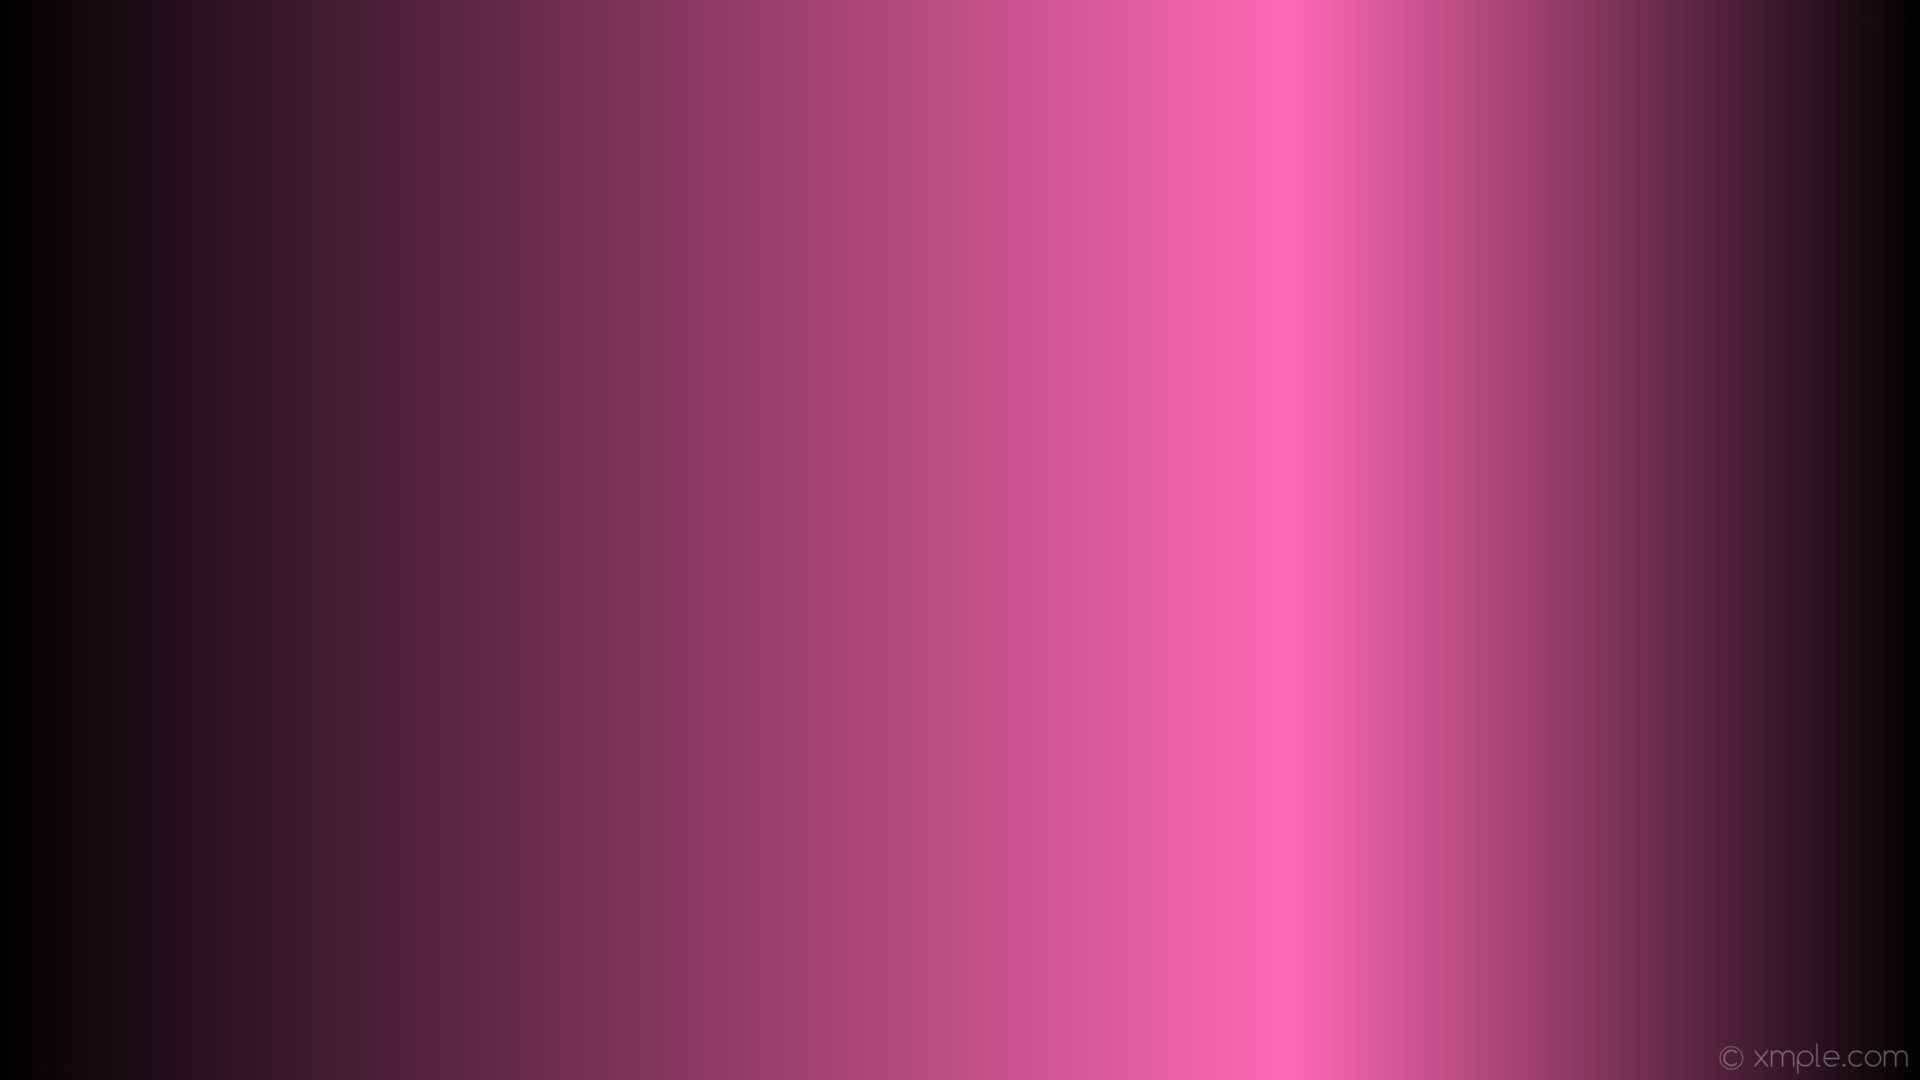 1920x1080 wallpaper highlight black pink gradient linear hot pink #000000 #ff69b4  180Â° 67%